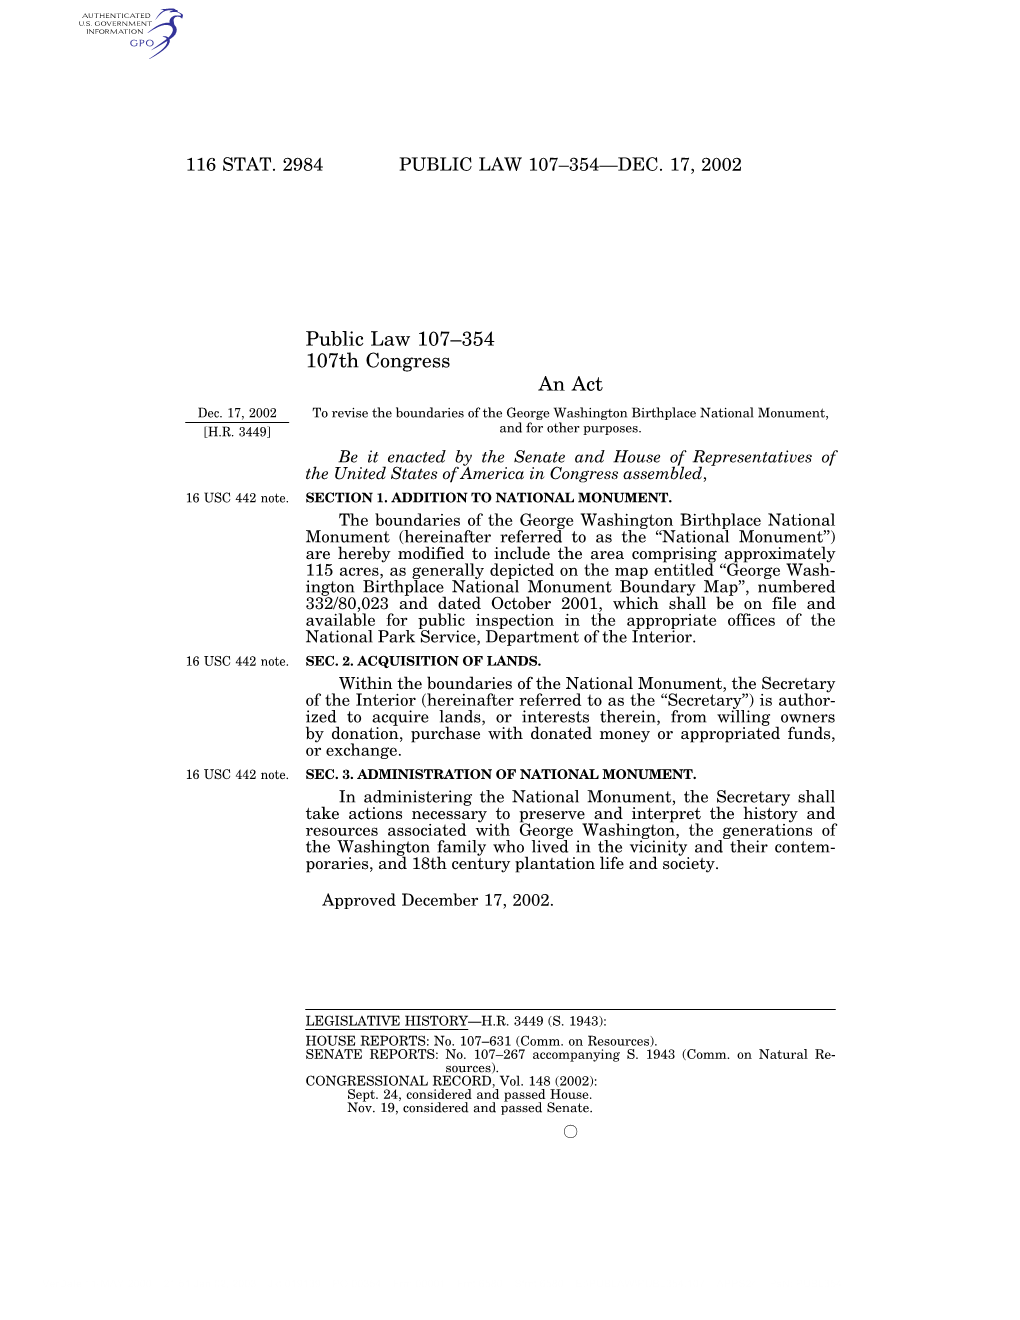 Public Law 107–354 107Th Congress an Act Dec